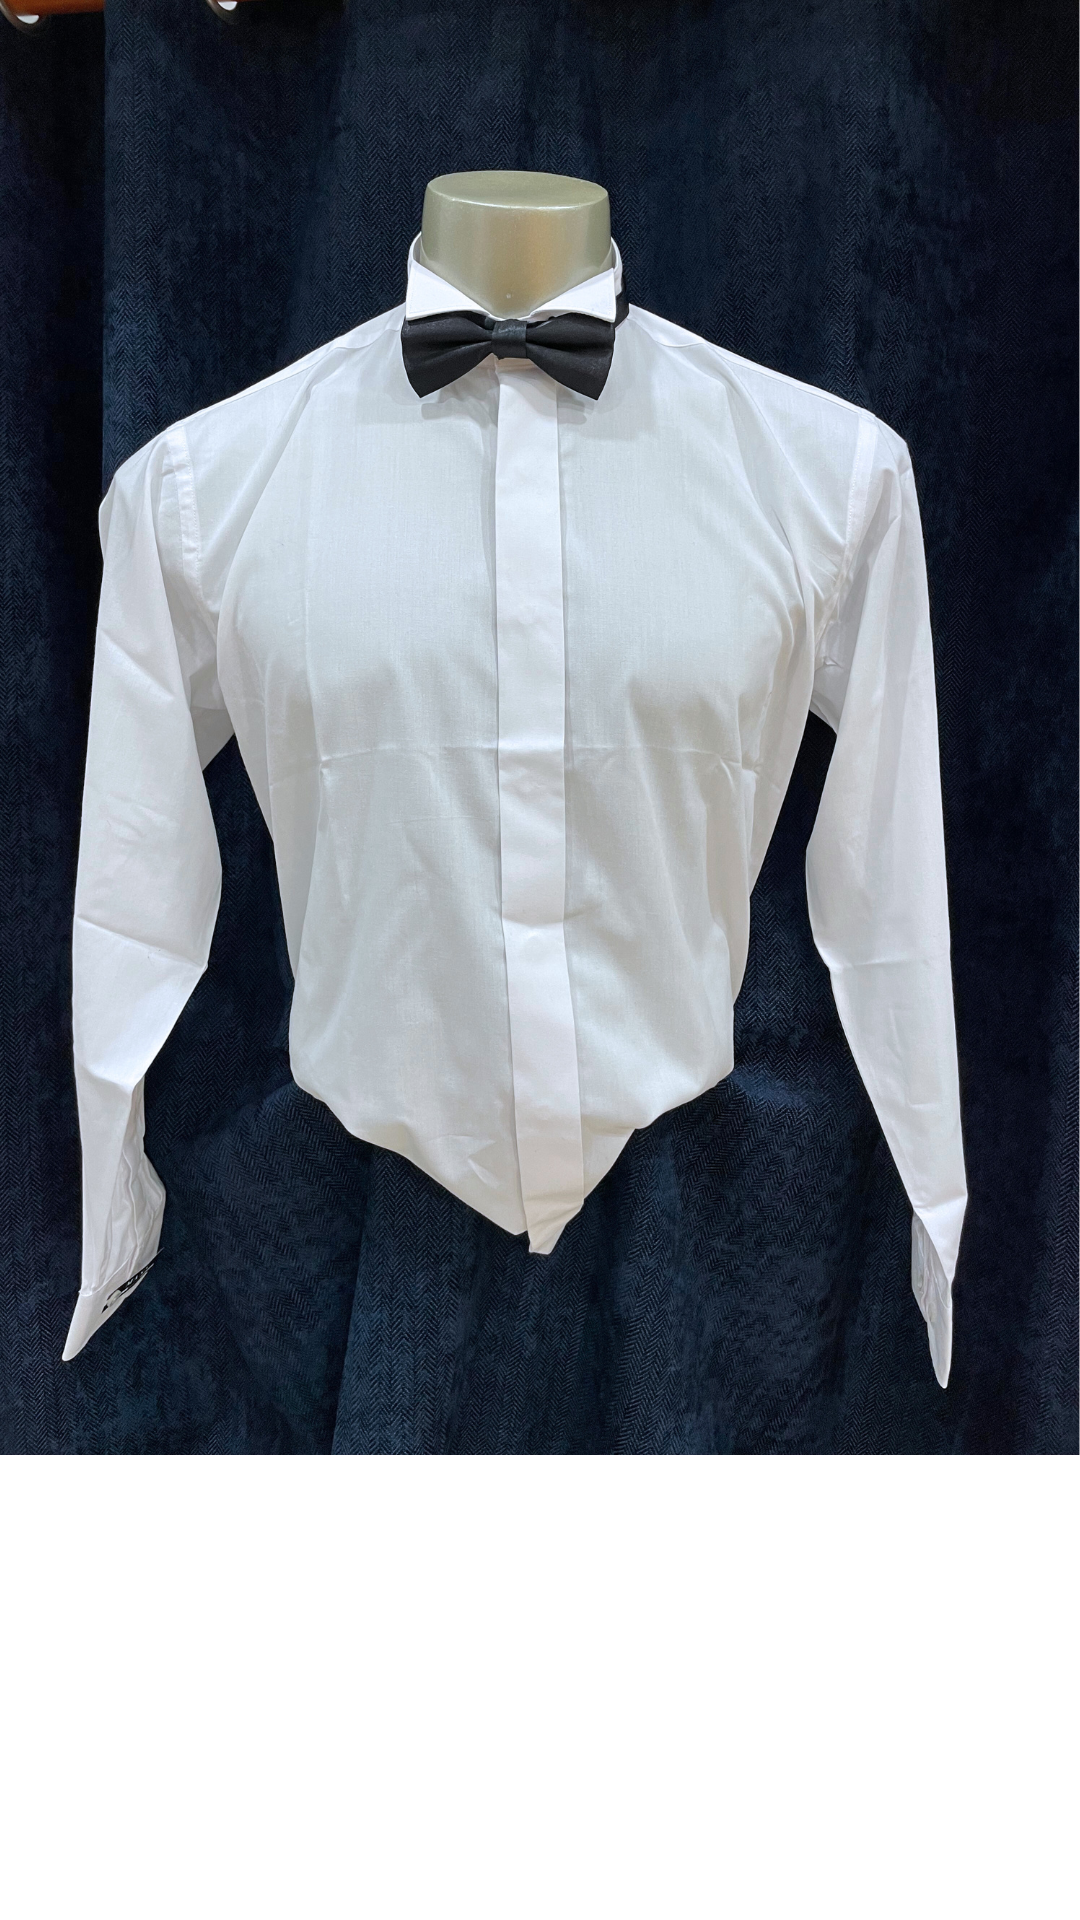 Mann Formal Wear winged collar men's White shirt